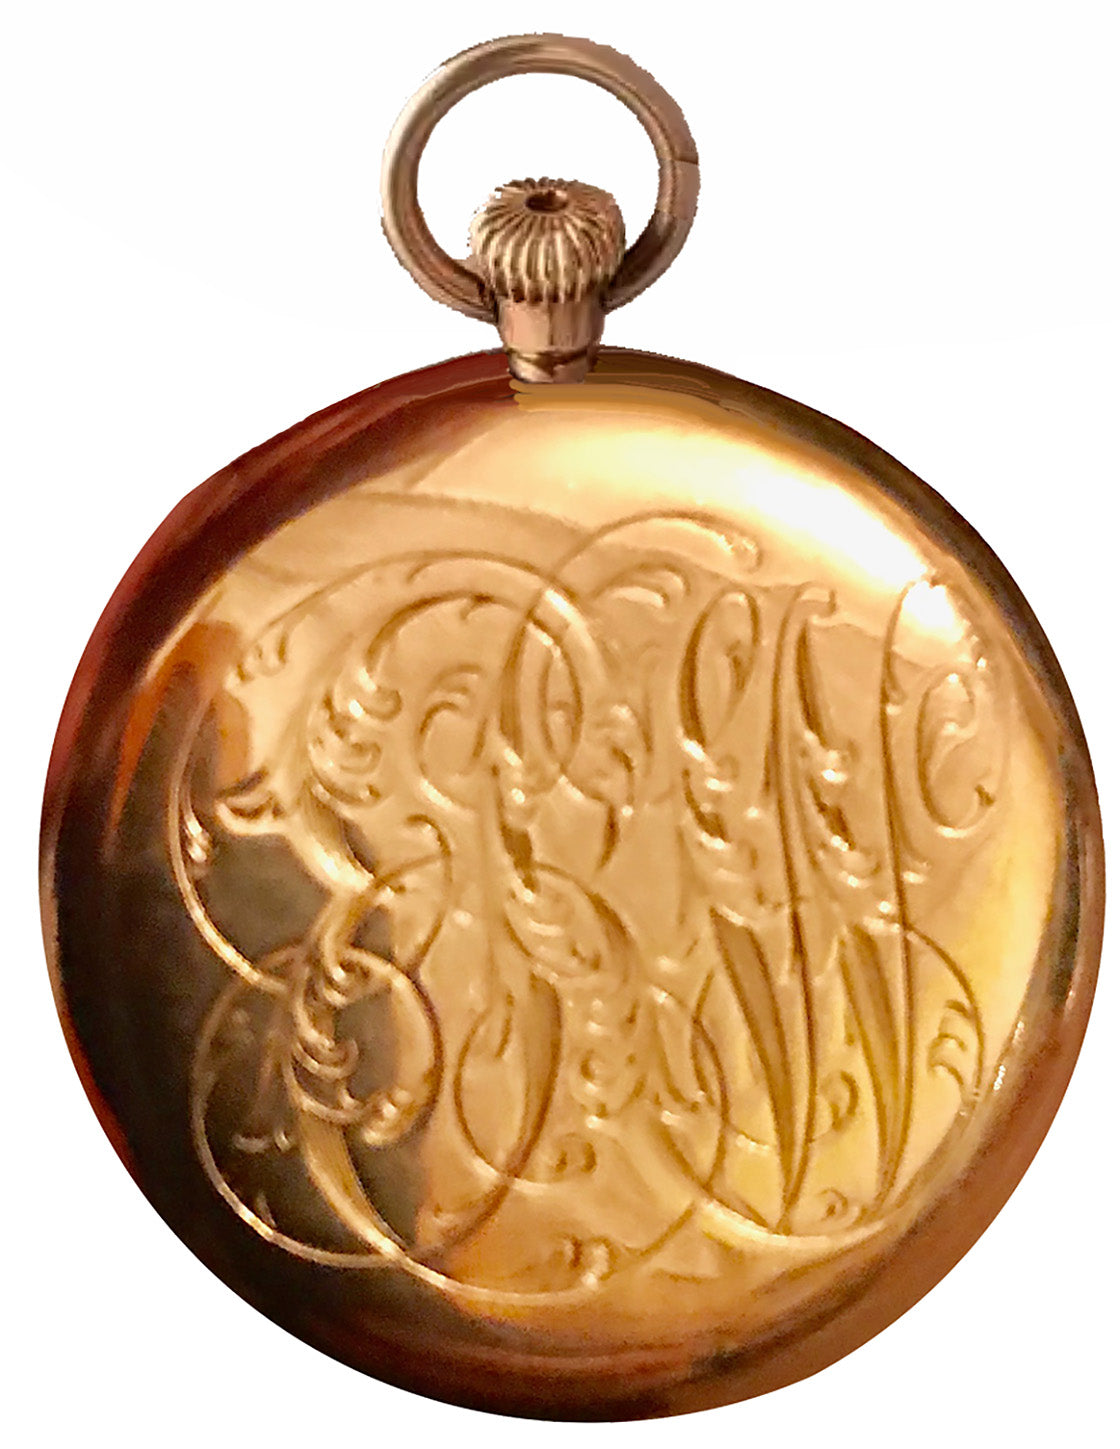 SOLD Vacheron Constantin 18K Rose Gold Pocket Watch Dated 1885